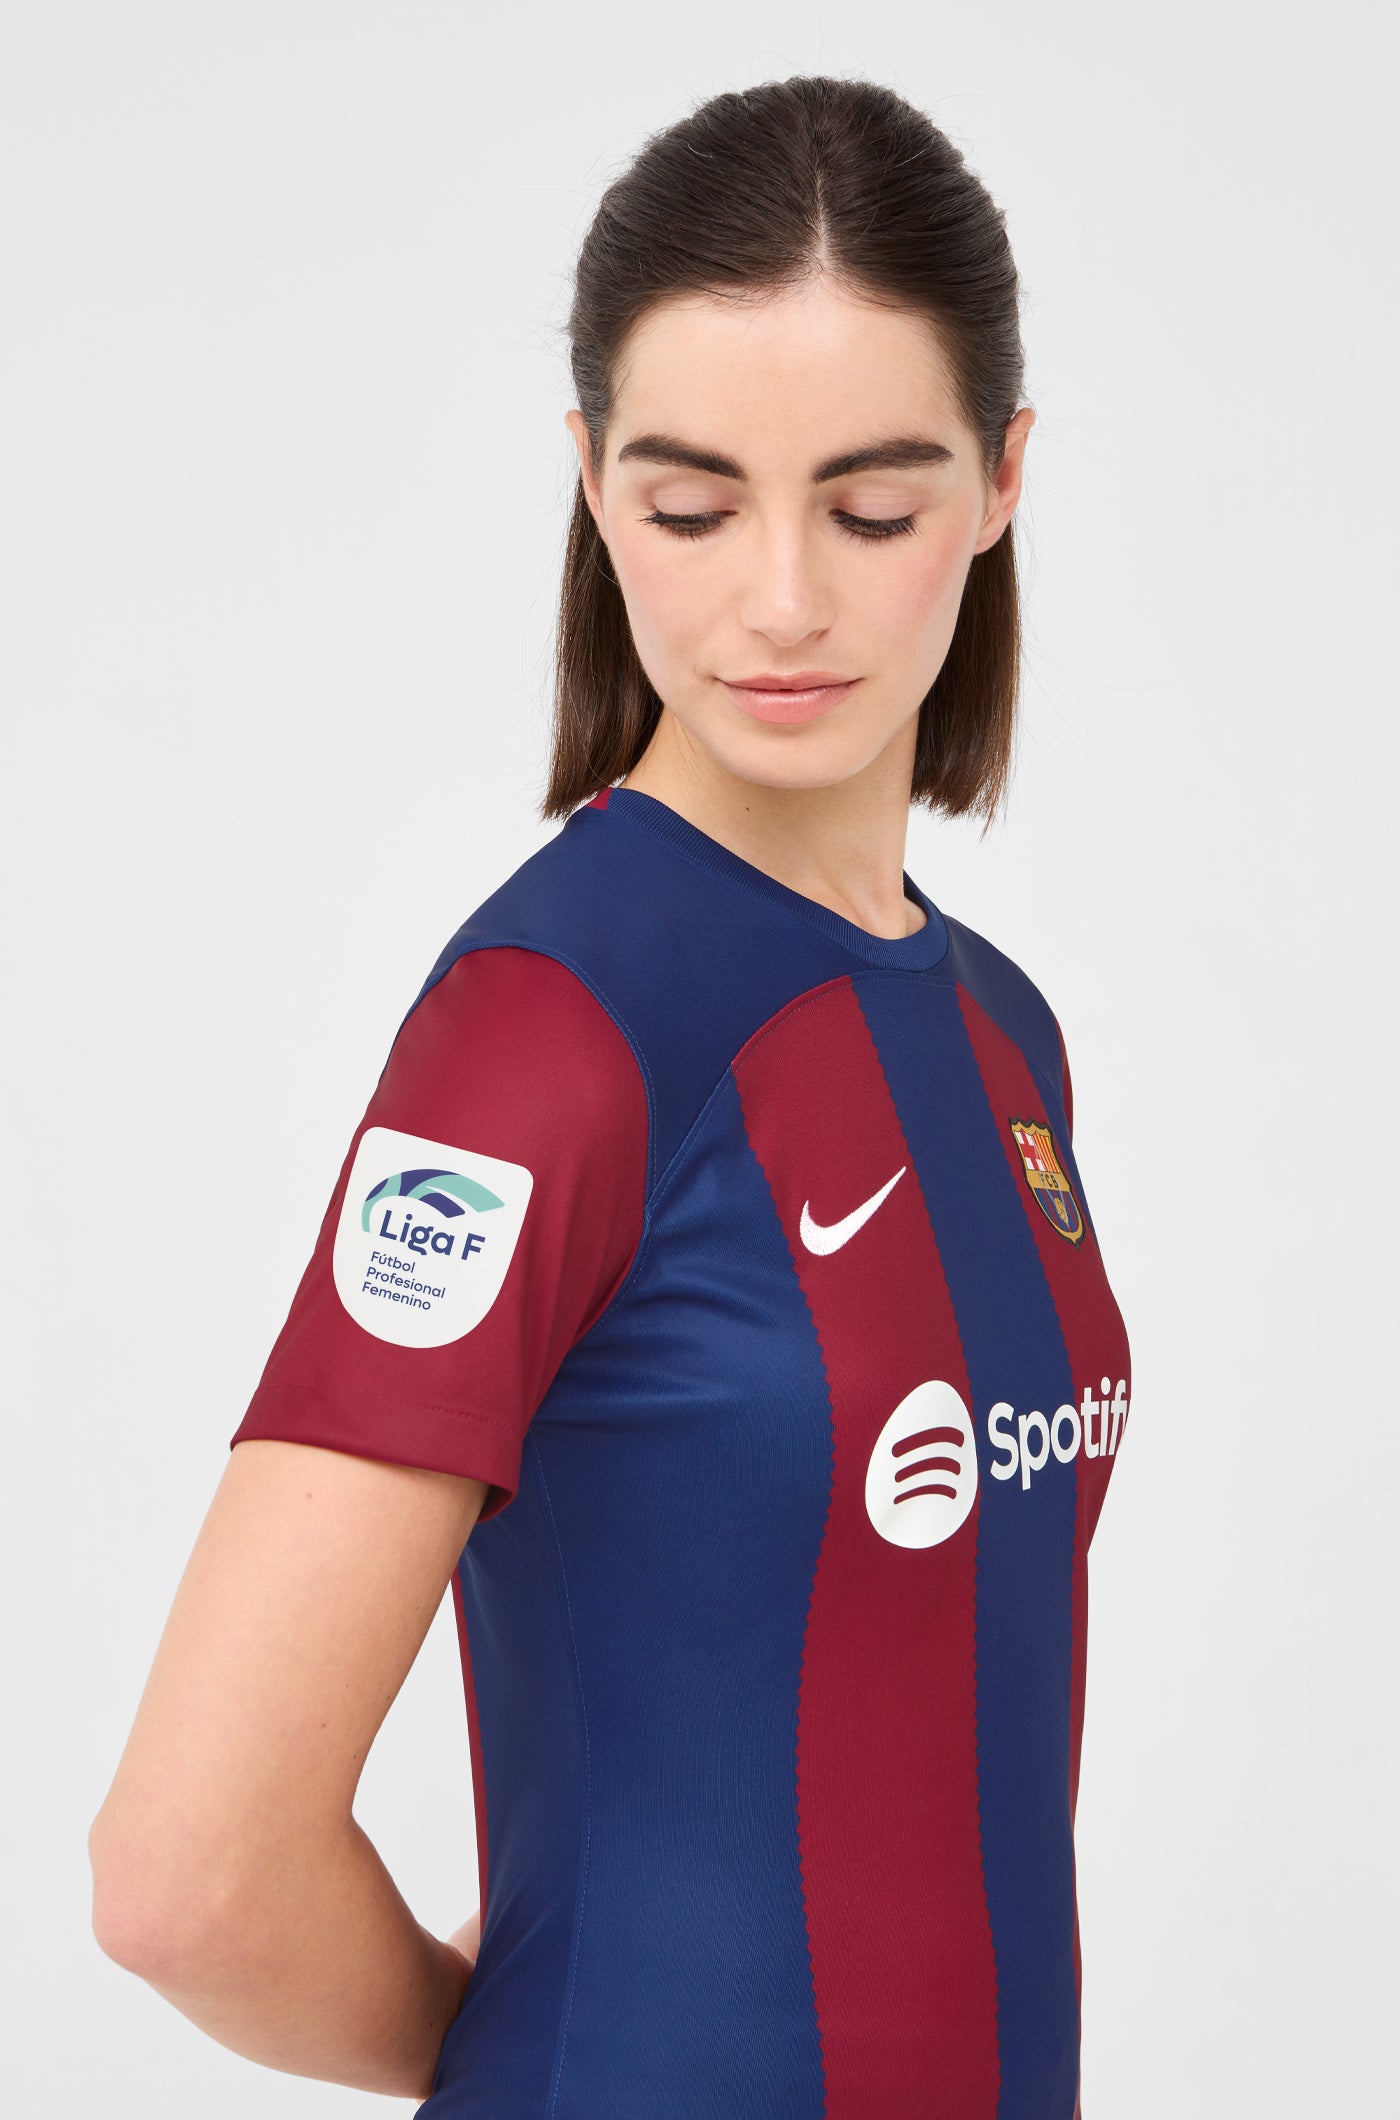 Liga F FC Barcelona home shirt 23/24 - Women - PINA